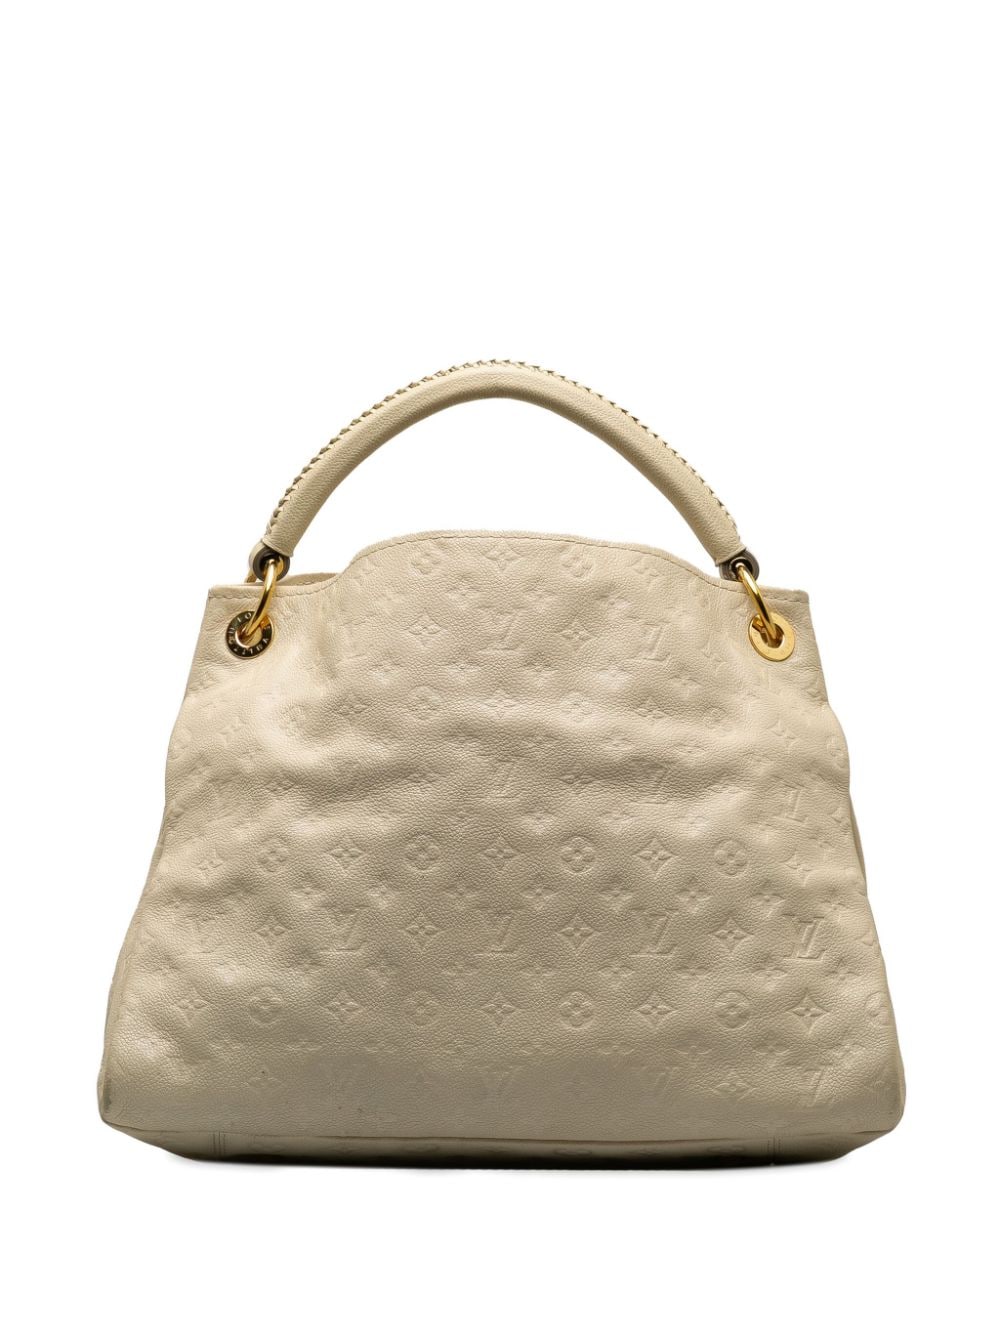 Louis Vuitton Pre-Owned 2011 Artsy MM tote bag - Beige